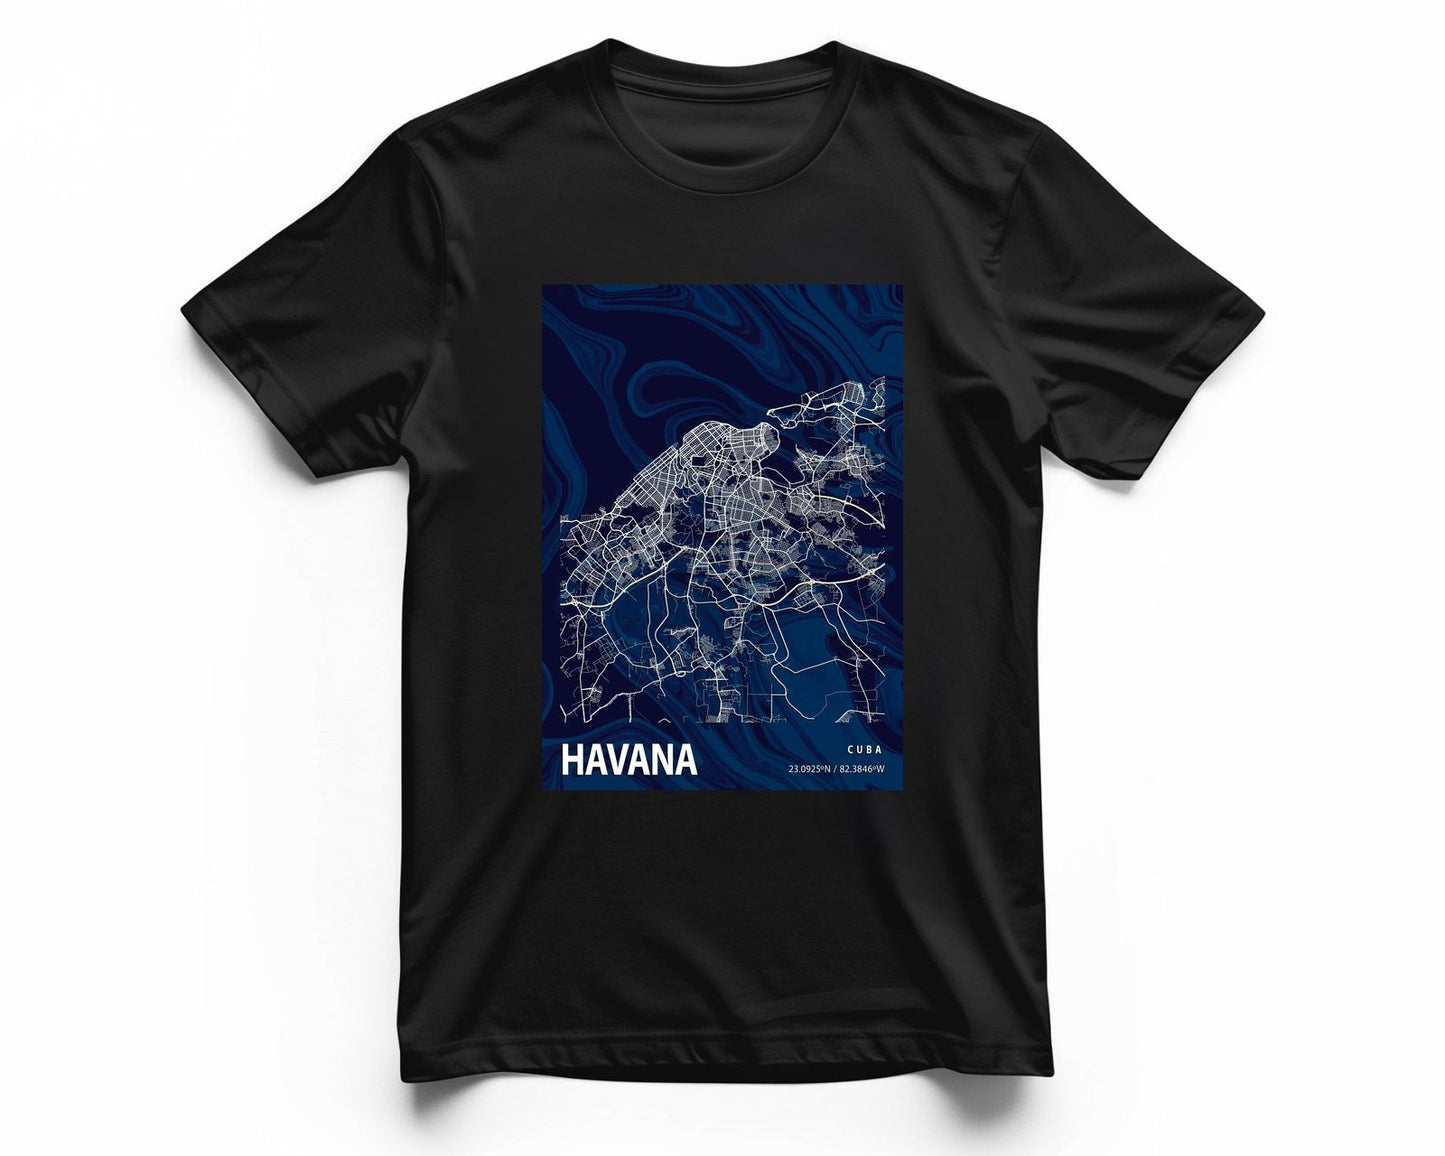 HAVANA CROCUS MARBLE MAP - @Helios